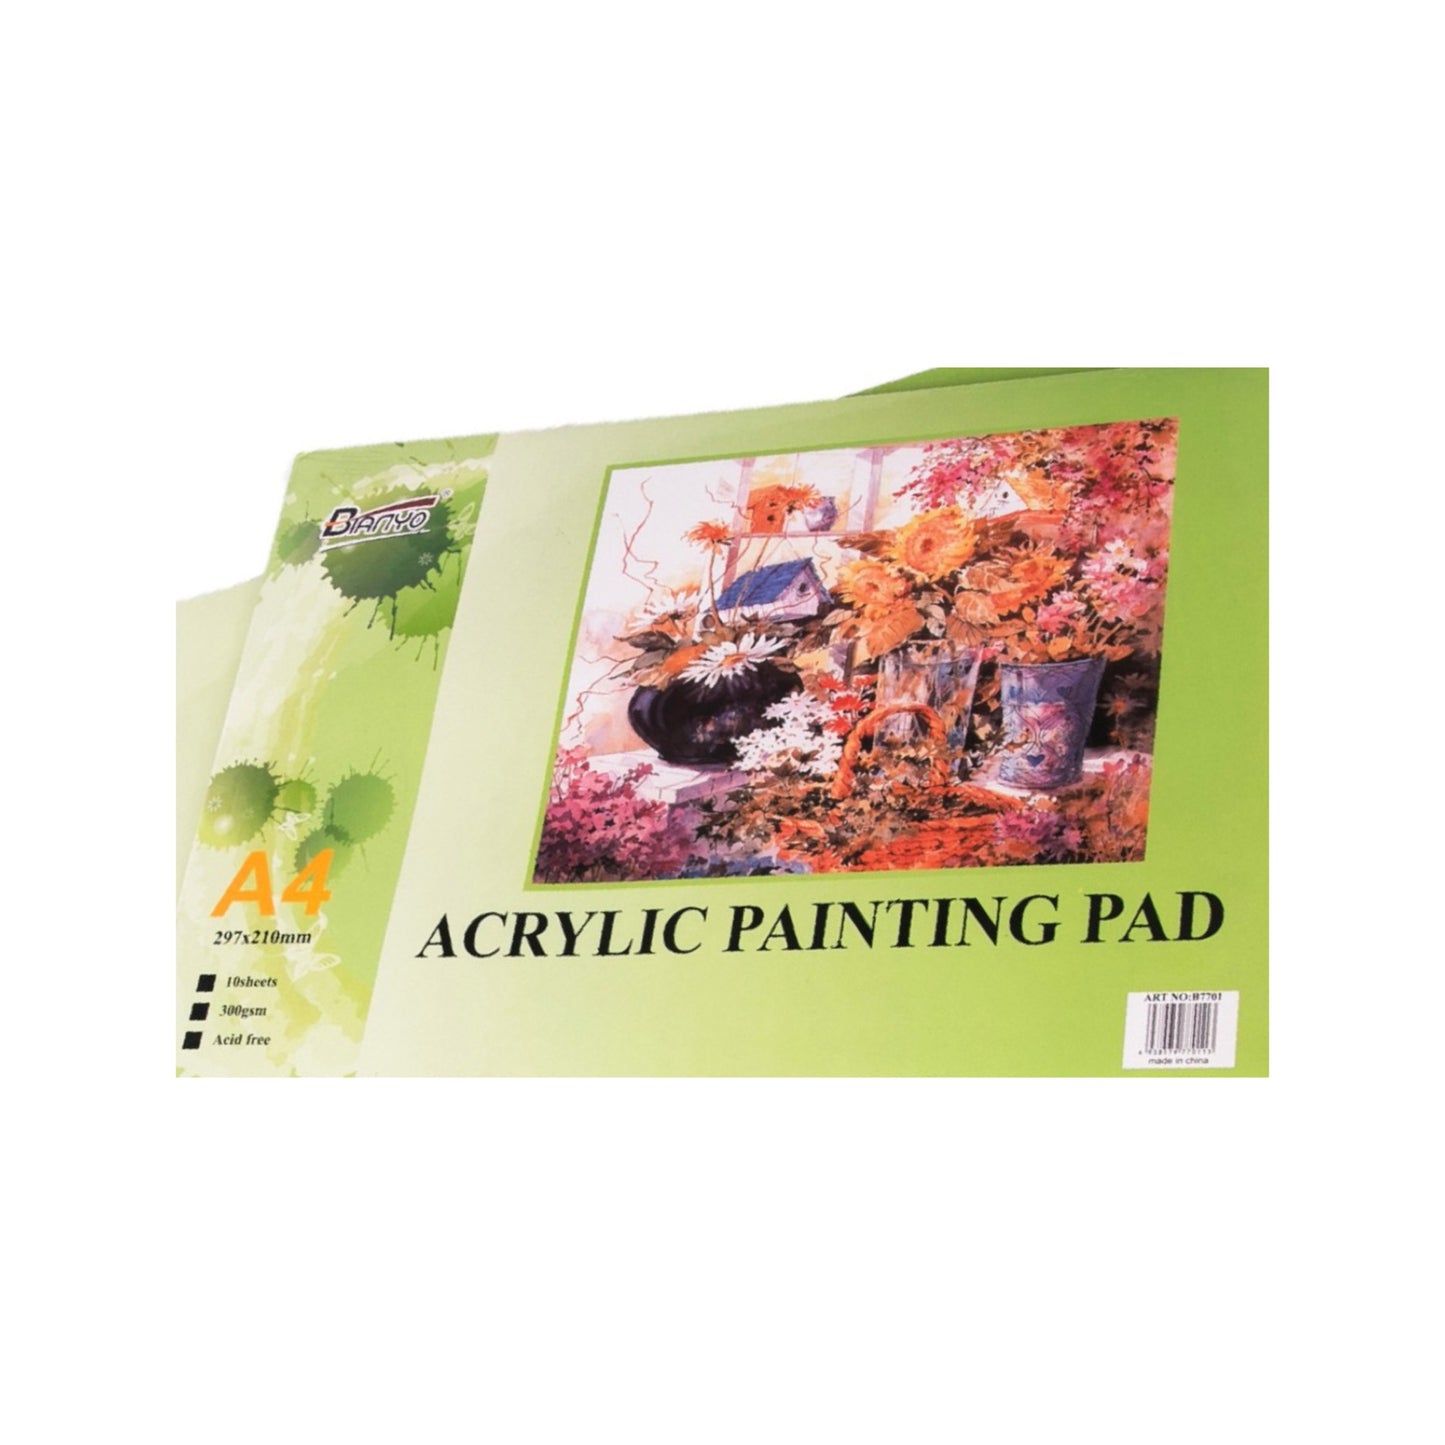 Acrylic Painting Pad || دفتر رسم و تلوين اكريليك